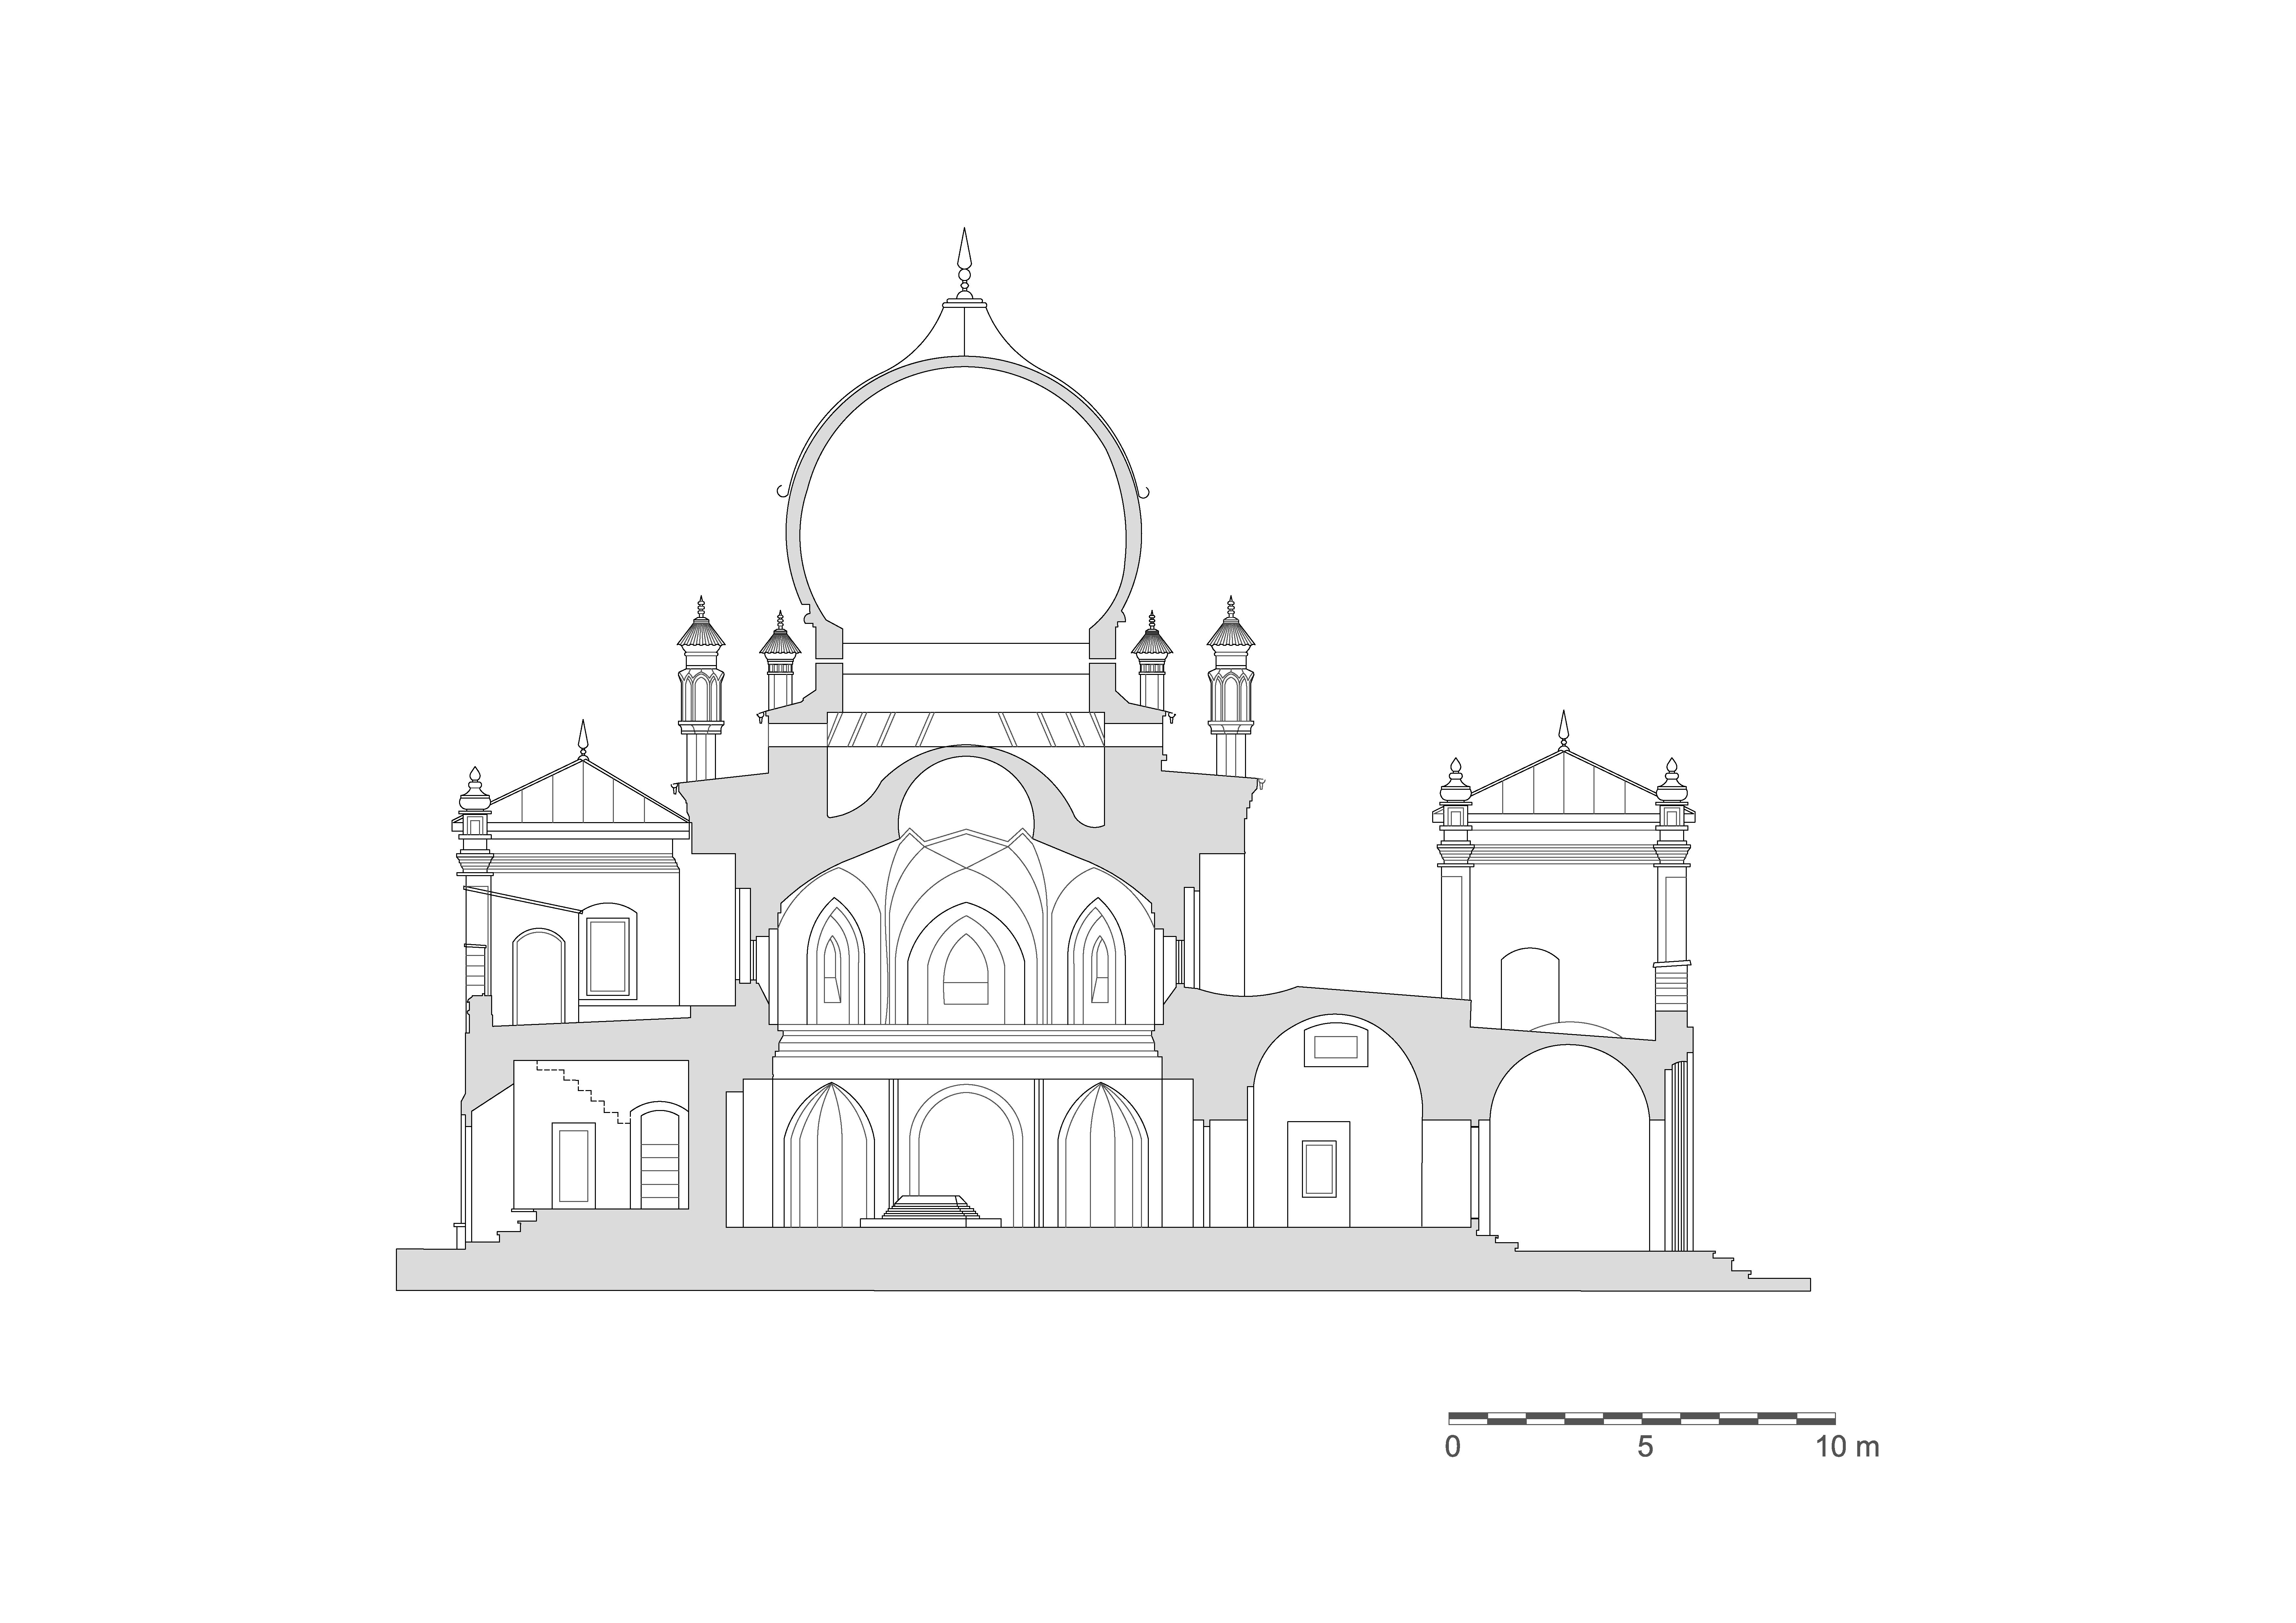 Drawing, section through Amir Abdur Rahman Khan Mausoleum